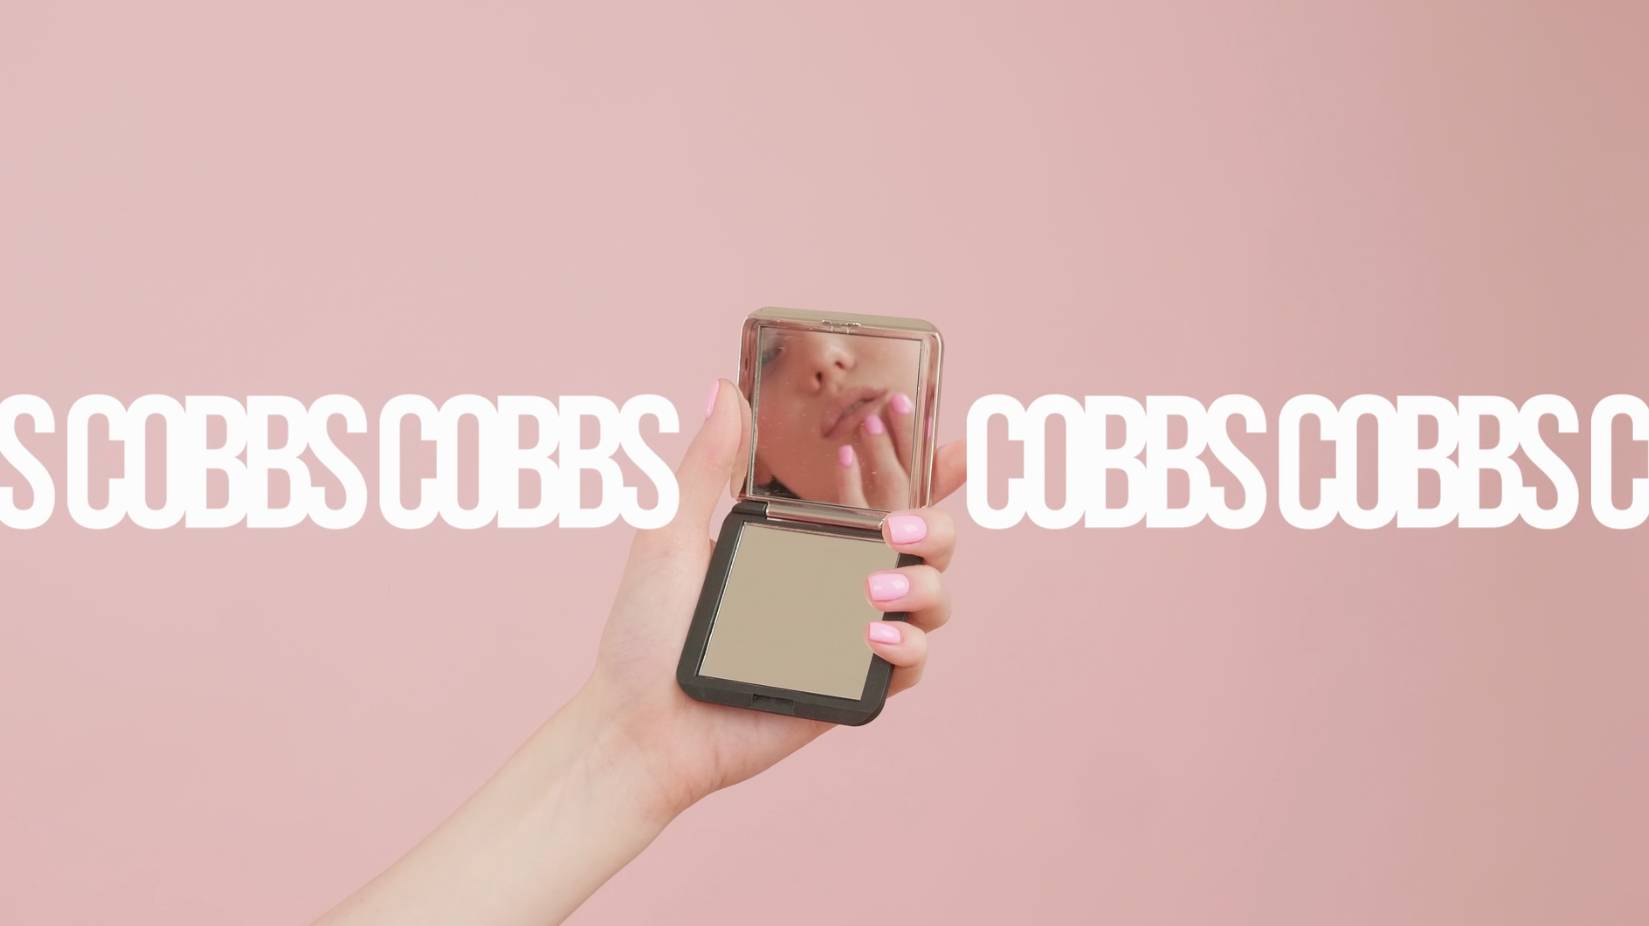 Cobbs